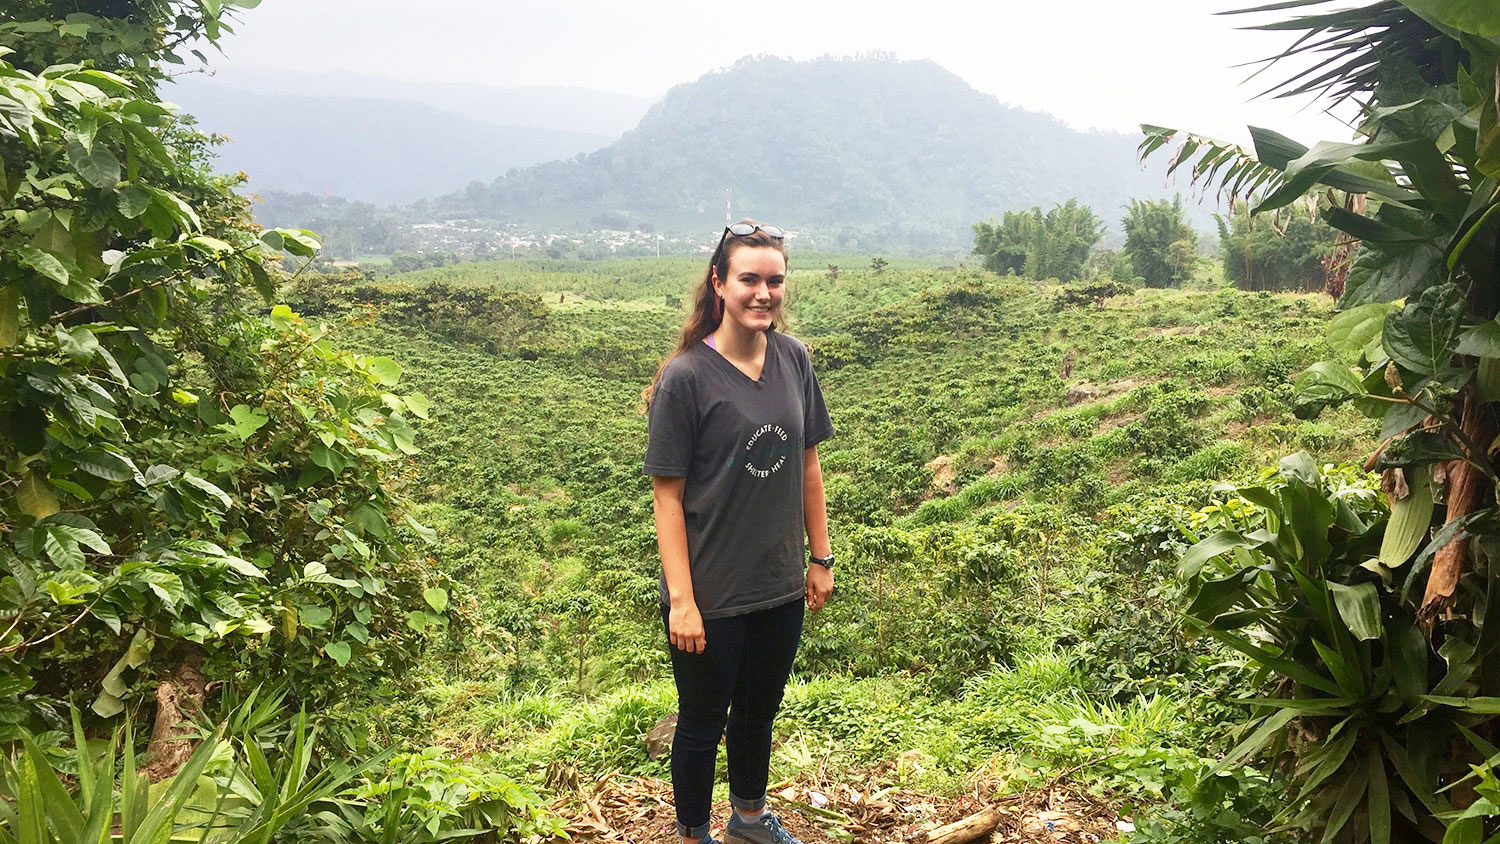 CALS student Kati Scruggs in the Guatemalan landscape